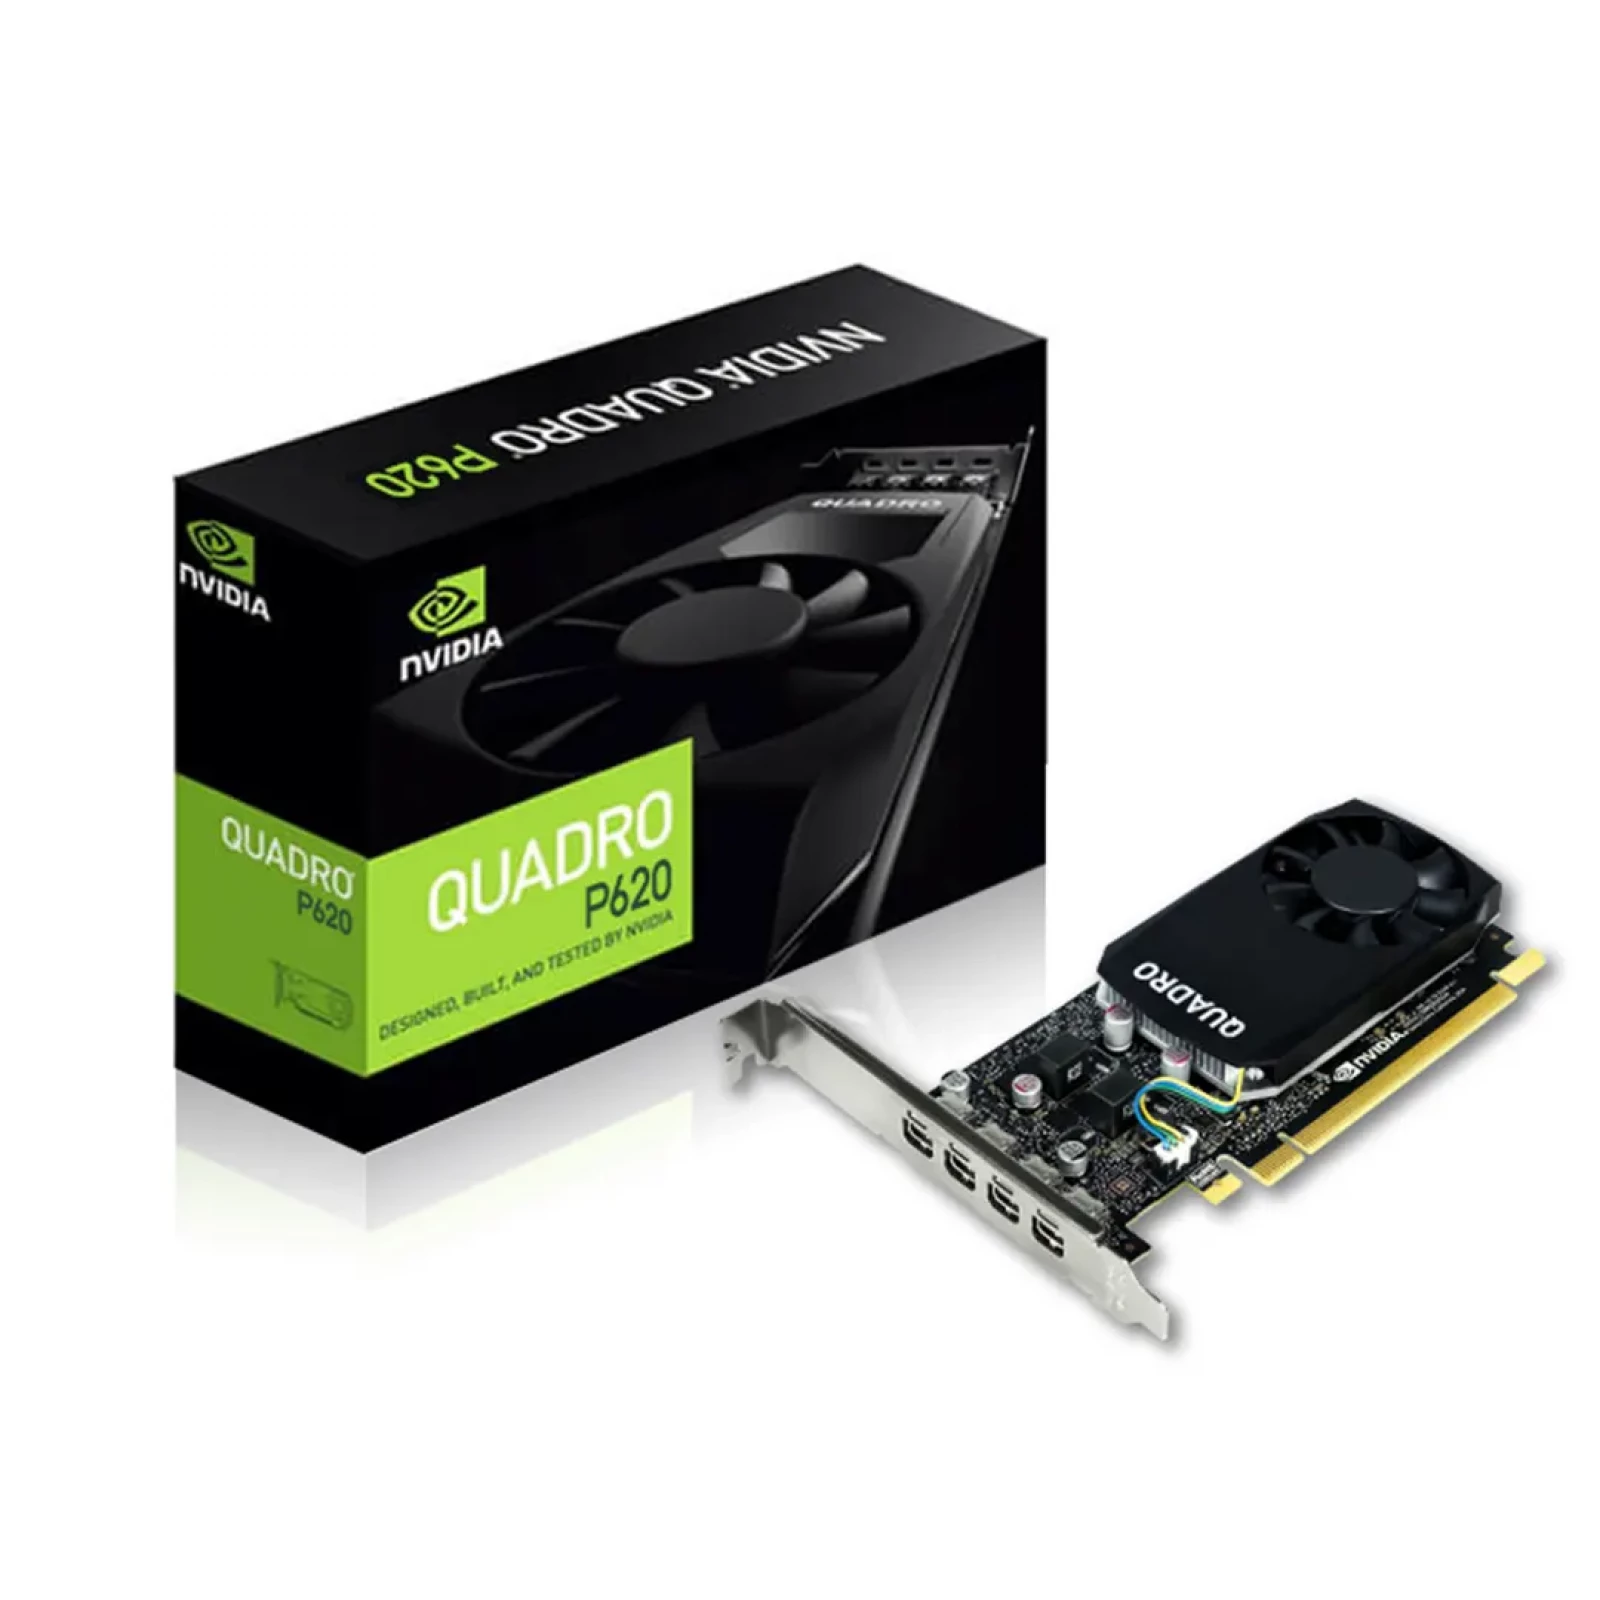 Nvidia Quadro P620 2 GB GDDR5 Graphics Card Price In Bangladesh